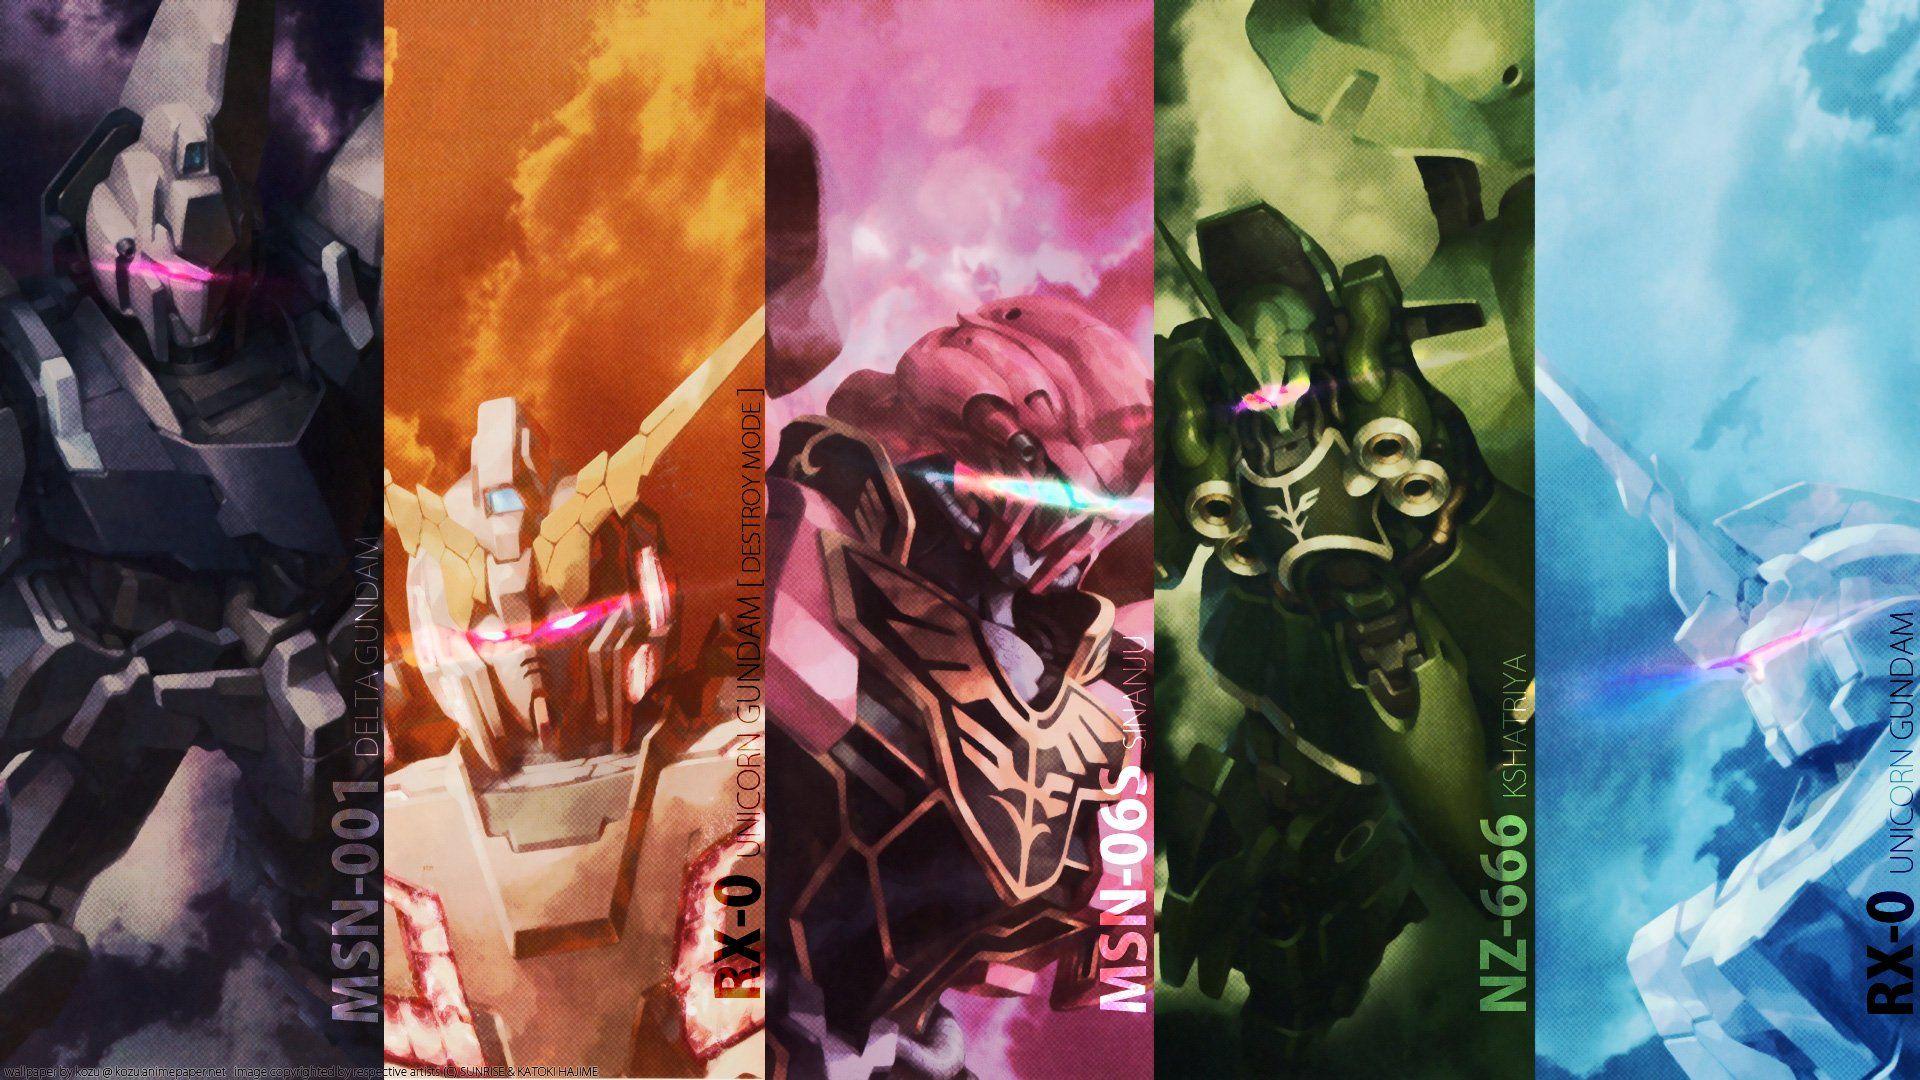 Mobile Suit Gundam Unicorn Full HD Wallpaper